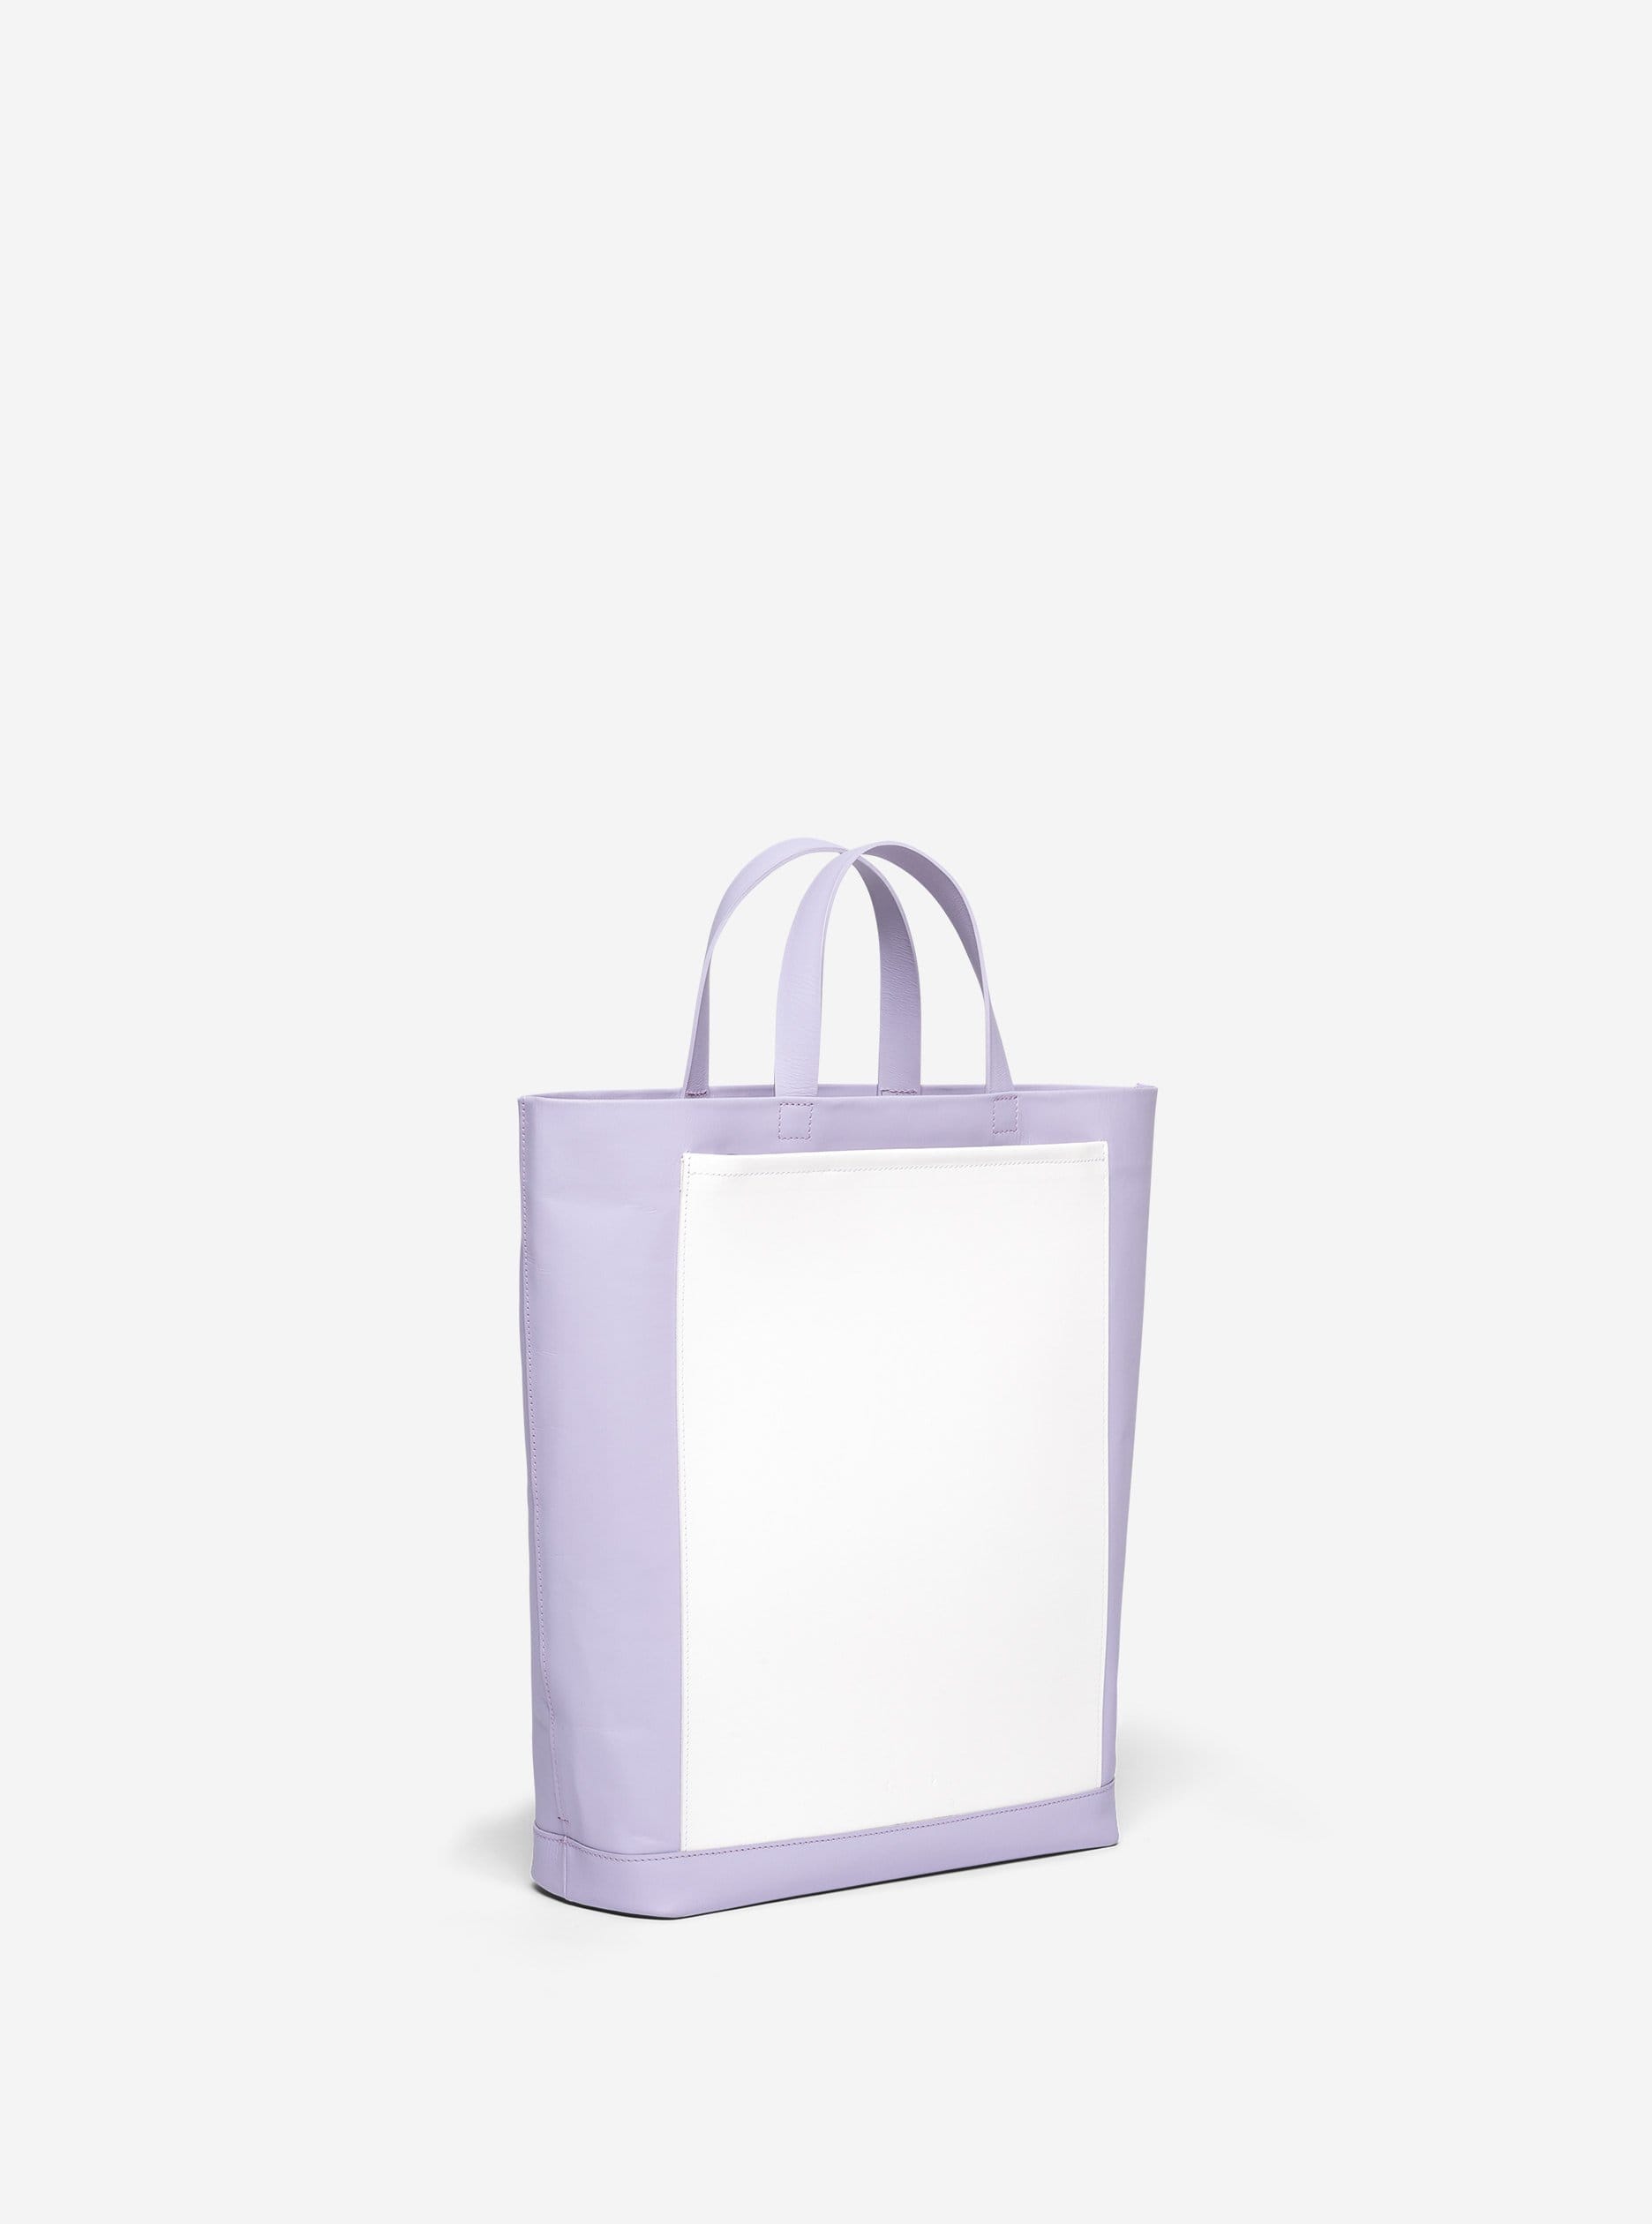 Tote bag in purple for men